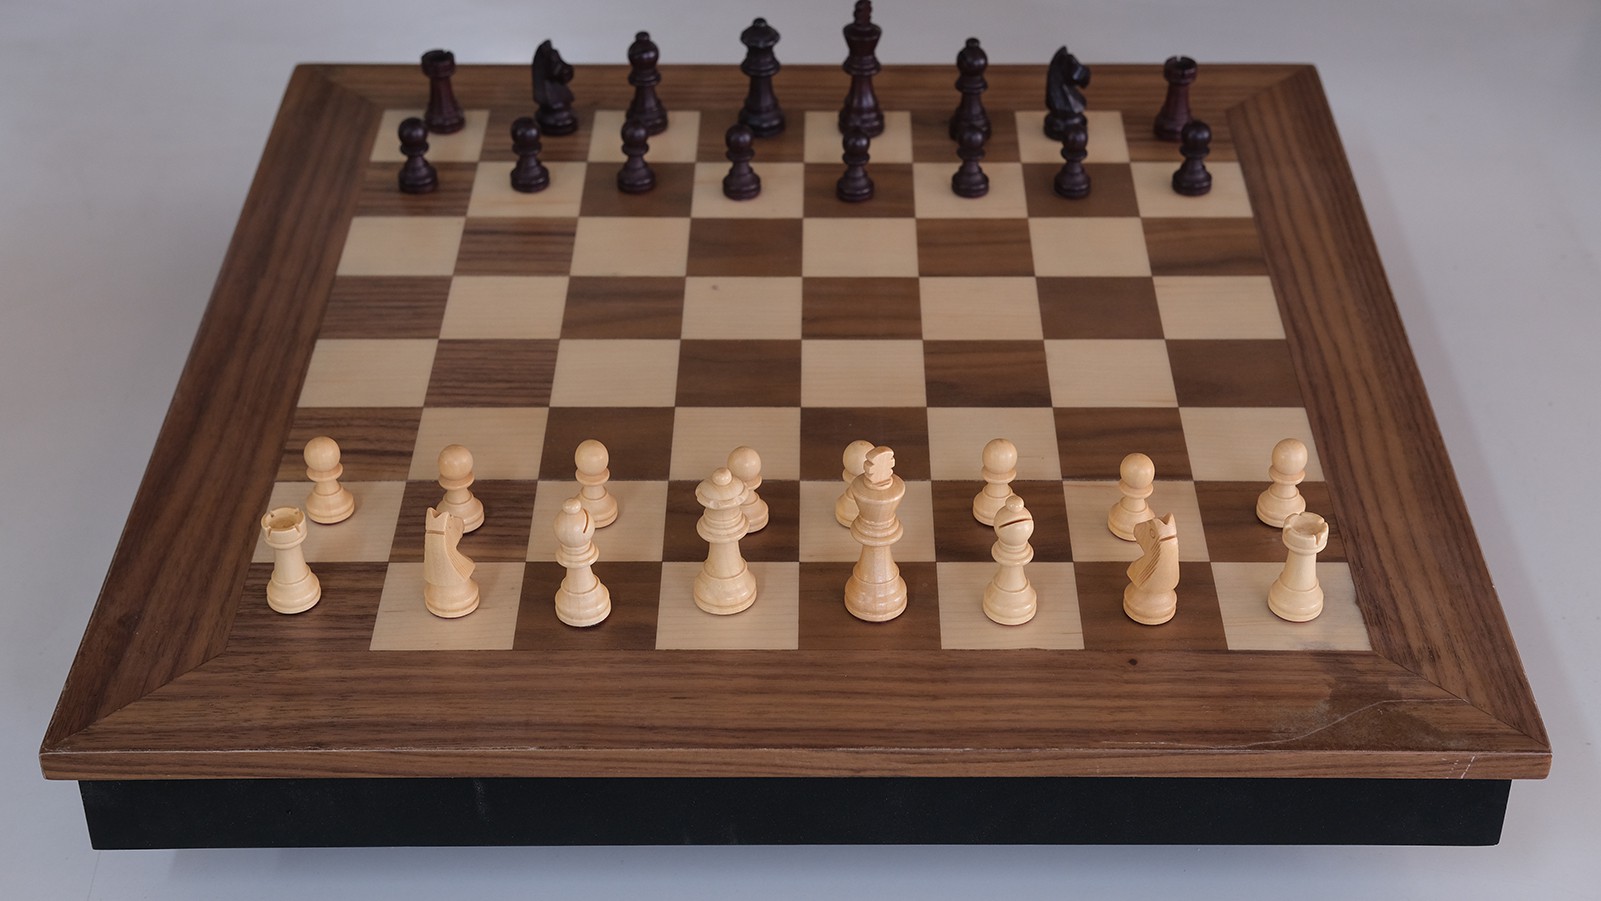 Phantom - Making My Own Automatic Chessboard